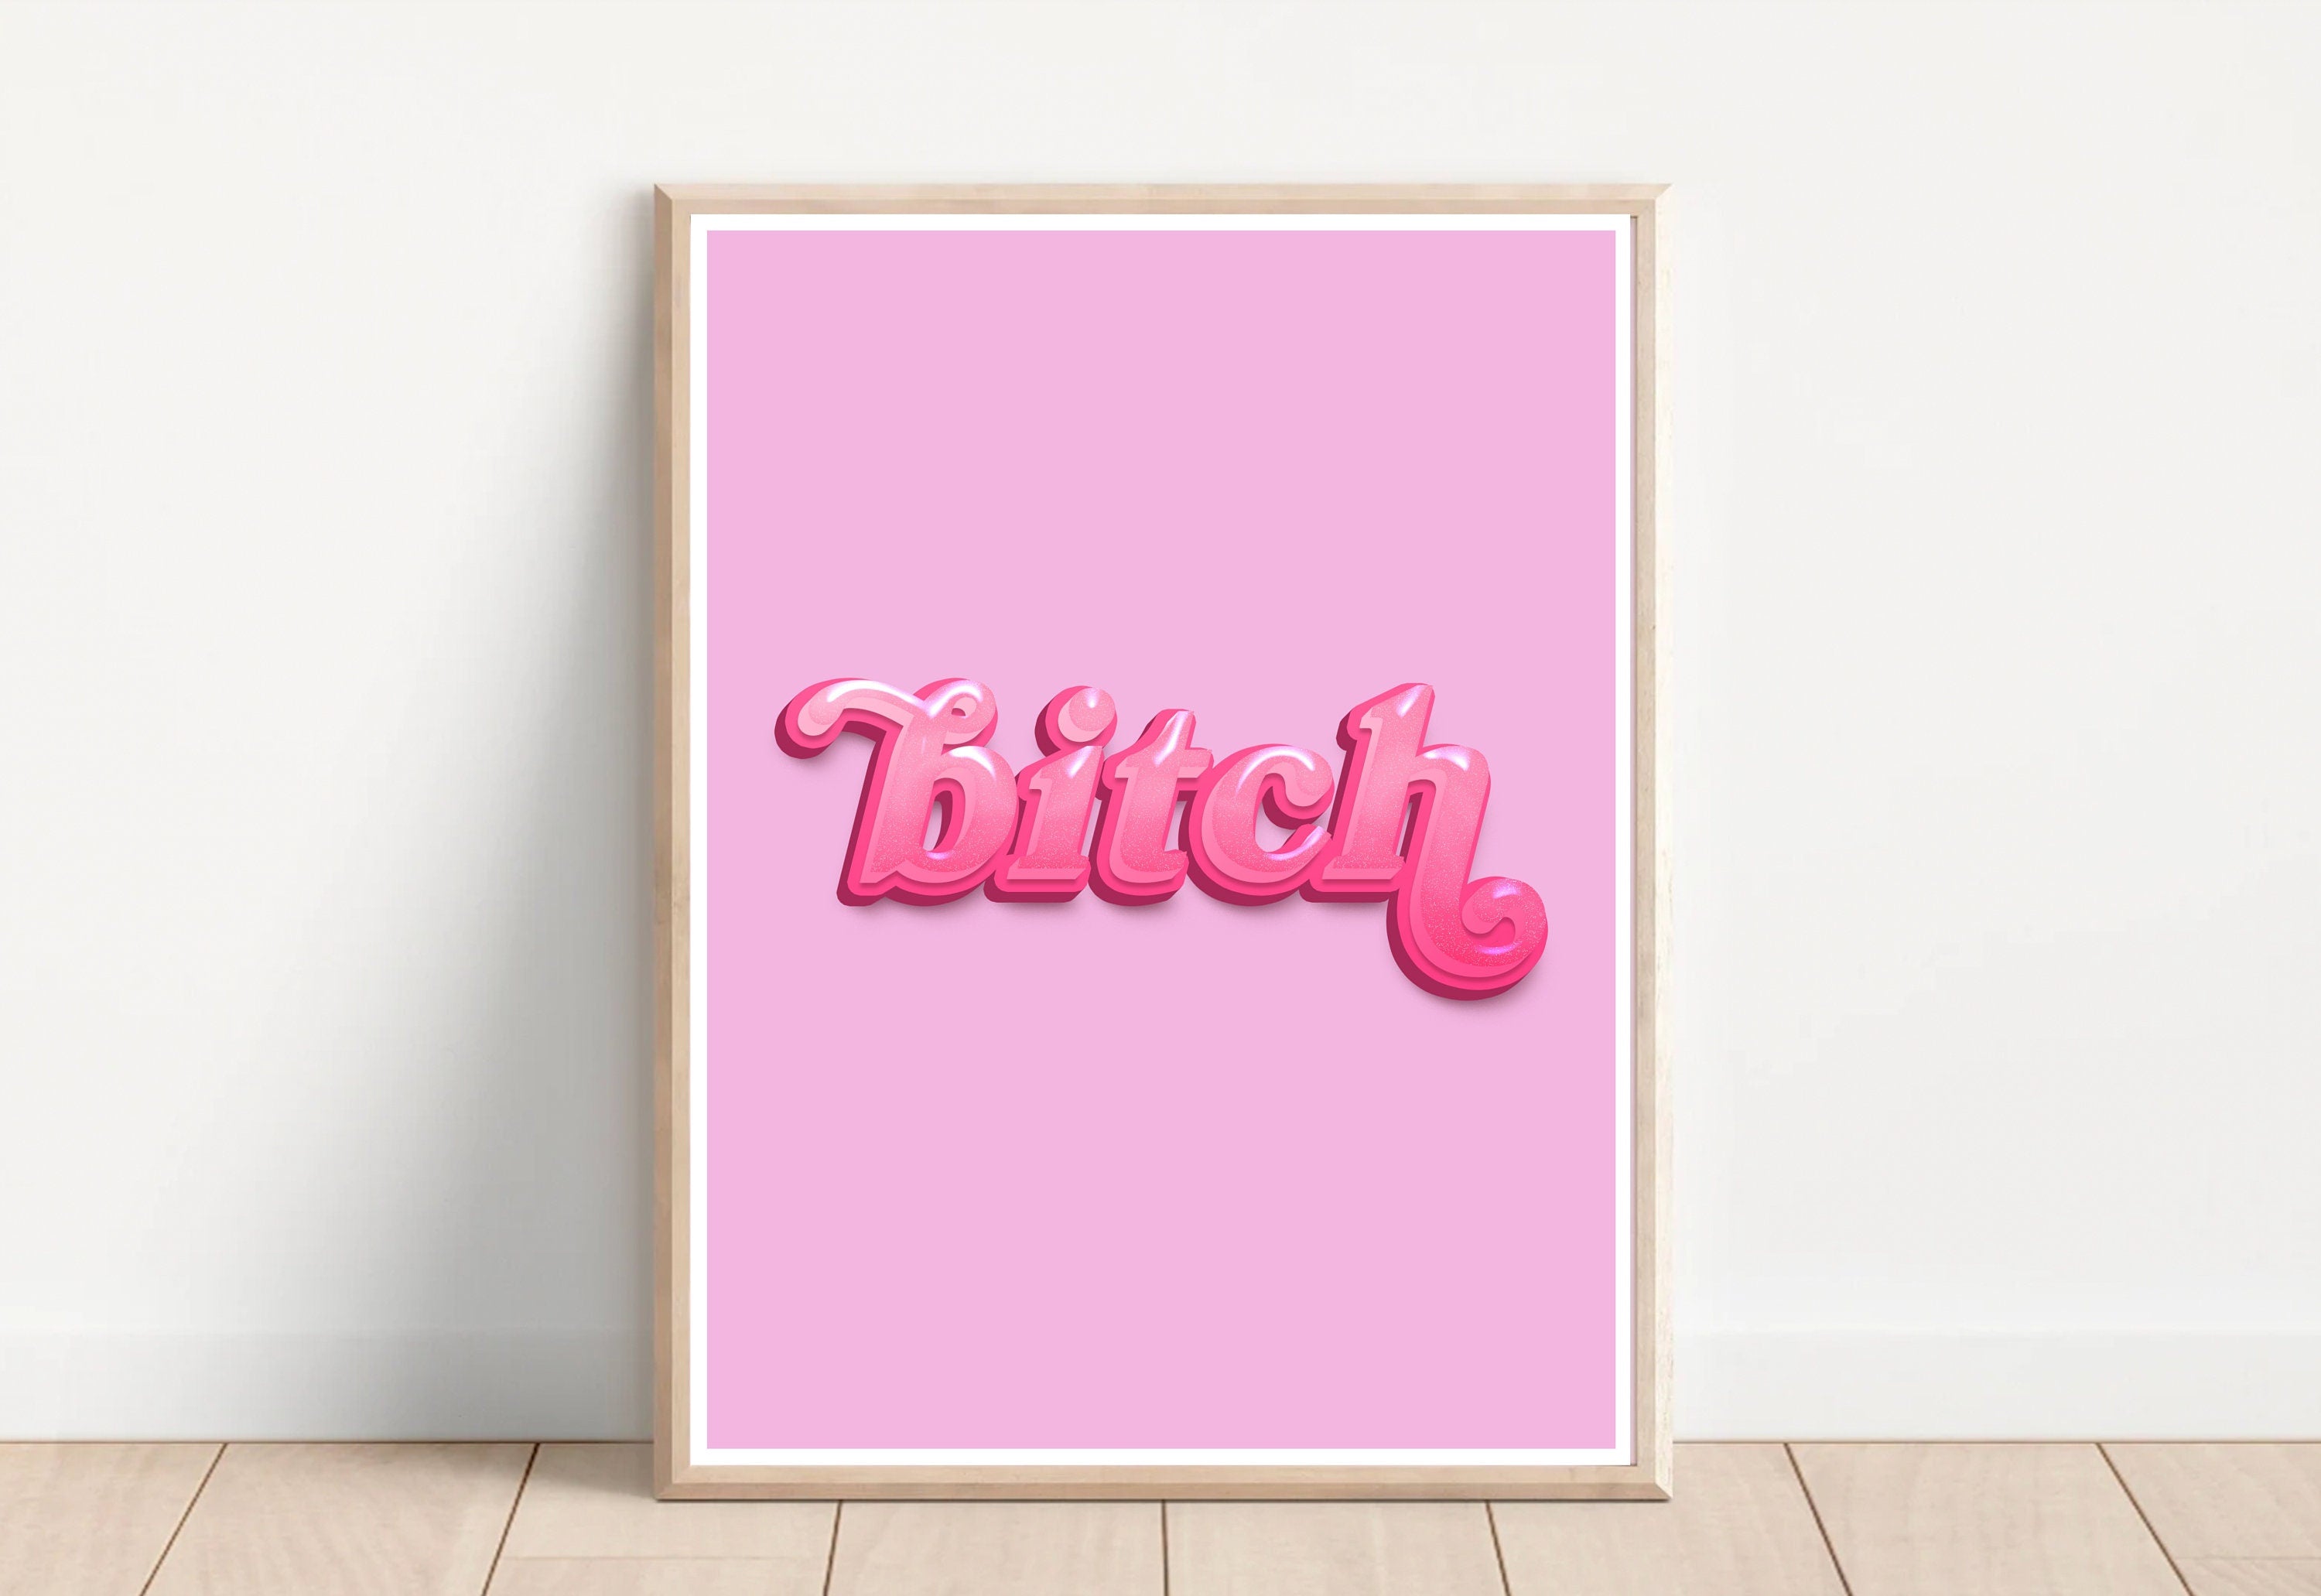 Bitch Hot Pink Art Print  by gs print shoppe